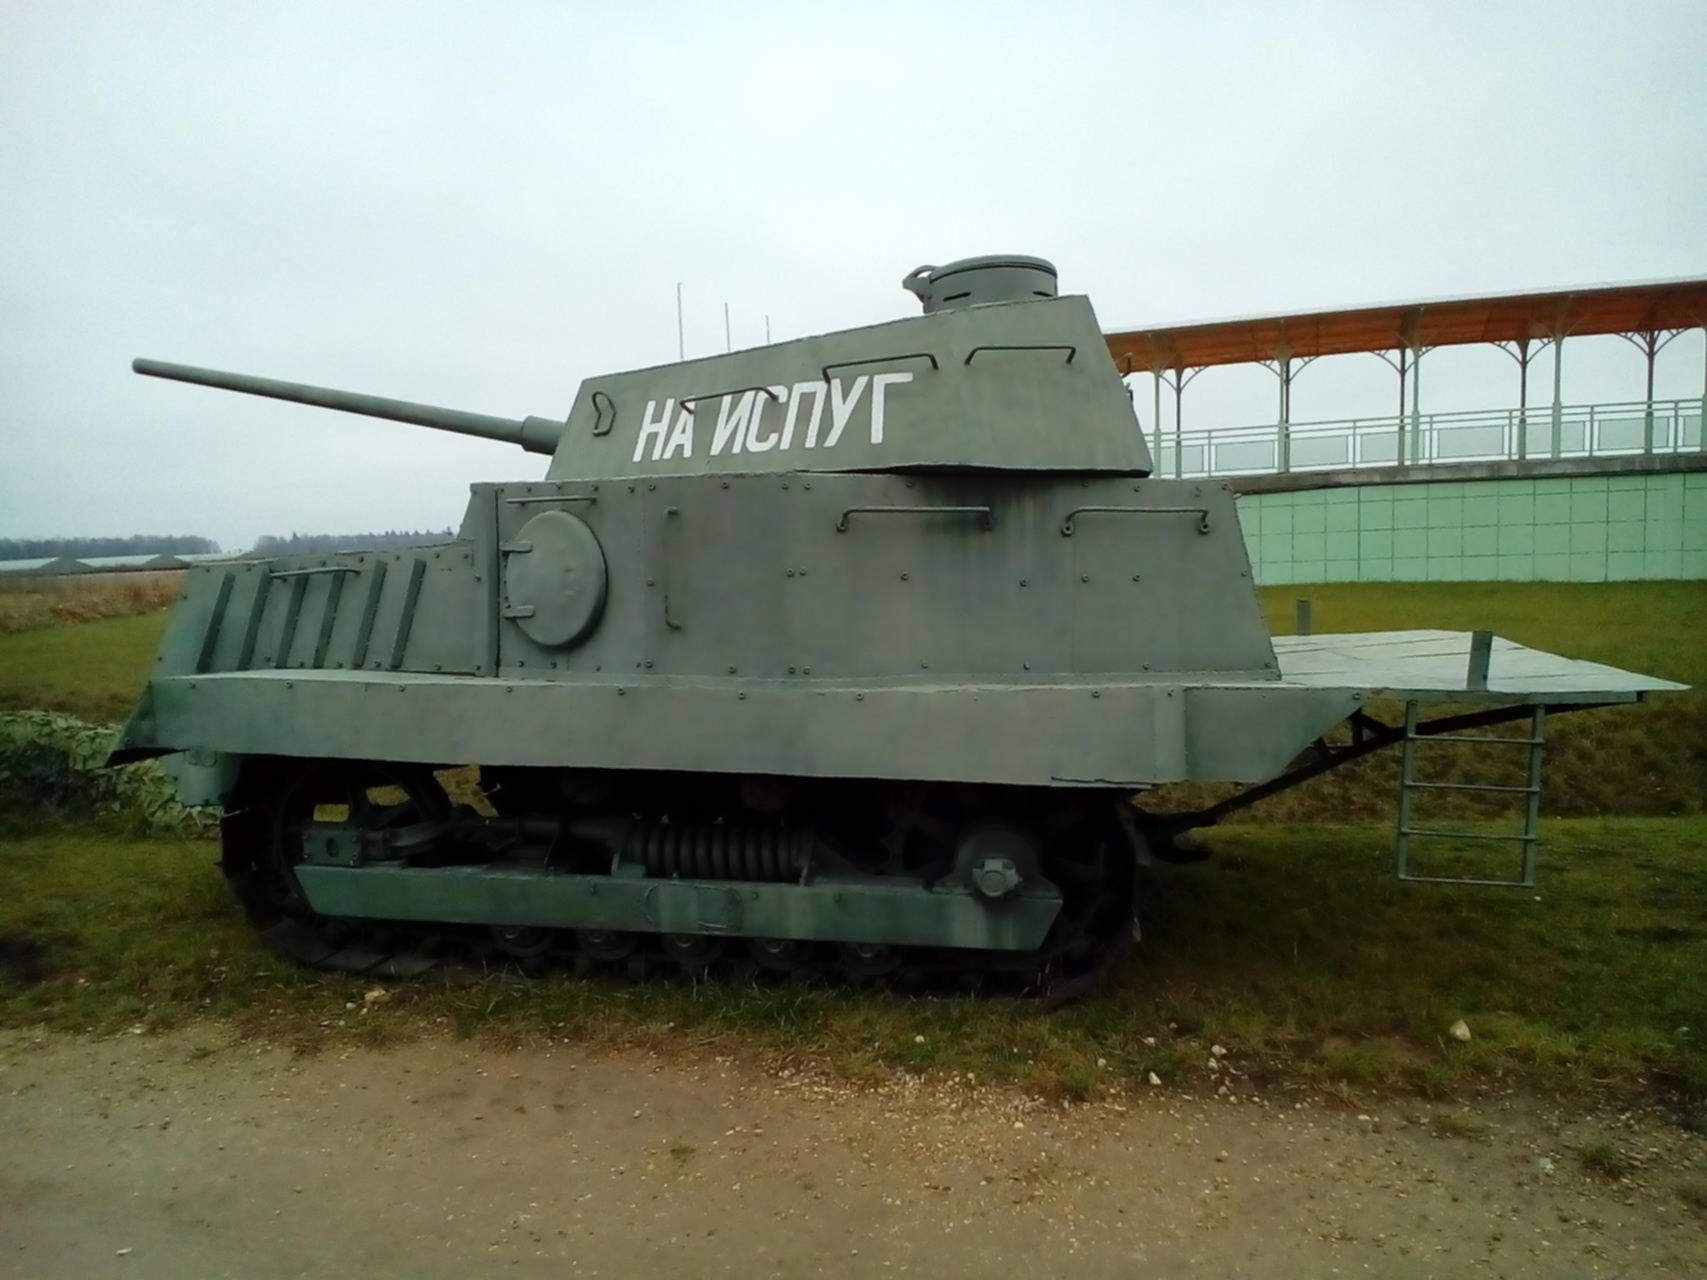 Тракторный танк. Ни-1 танк. Советский танк ни-1. Танк ни-1 Одесса. Танк на испуг ни-1.